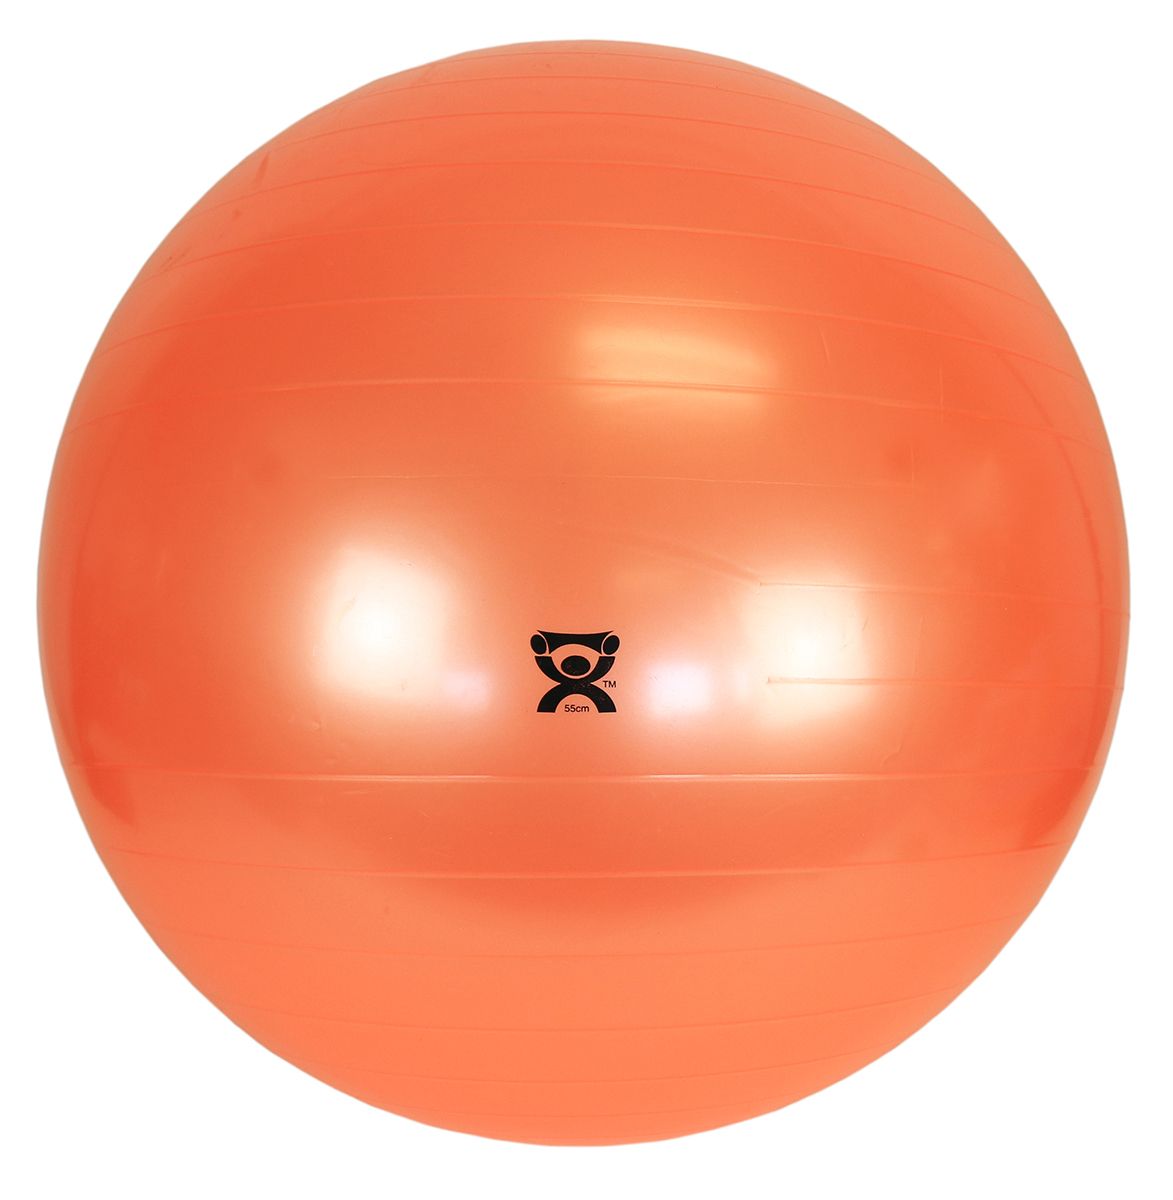 Cando Inflatable Exercise Ball - Orange - 22" (55 cm)